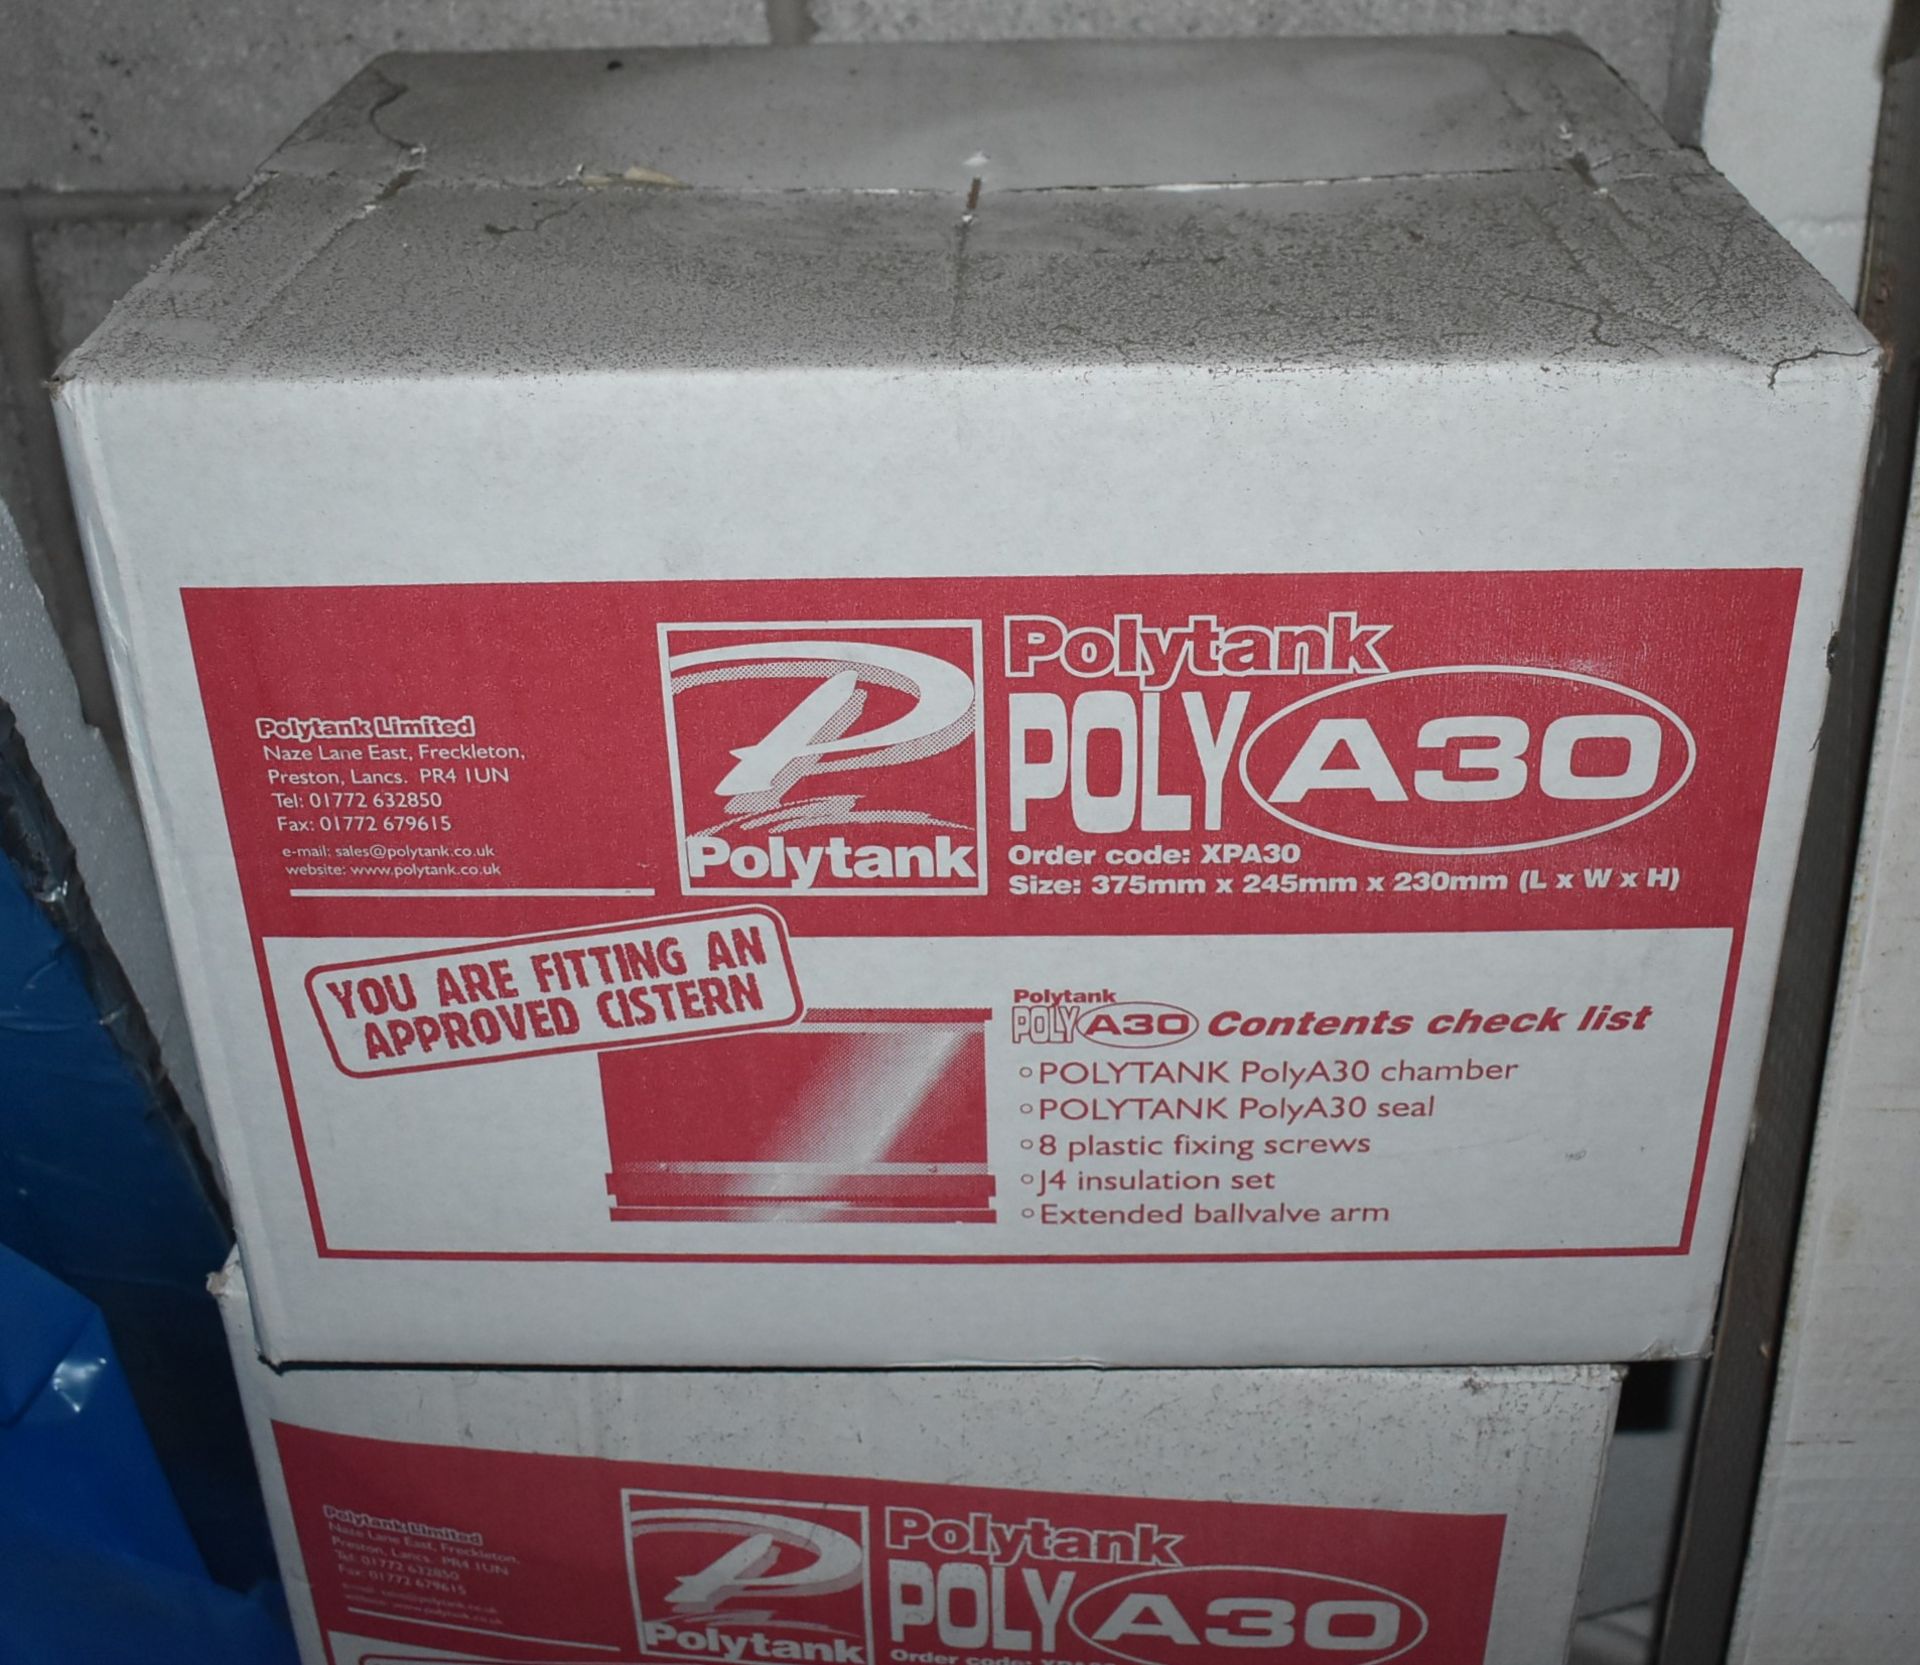 3 x Polytank Poly A30 Kits - New Boxed Kits - XPA30 - RRP £360 - Image 2 of 2